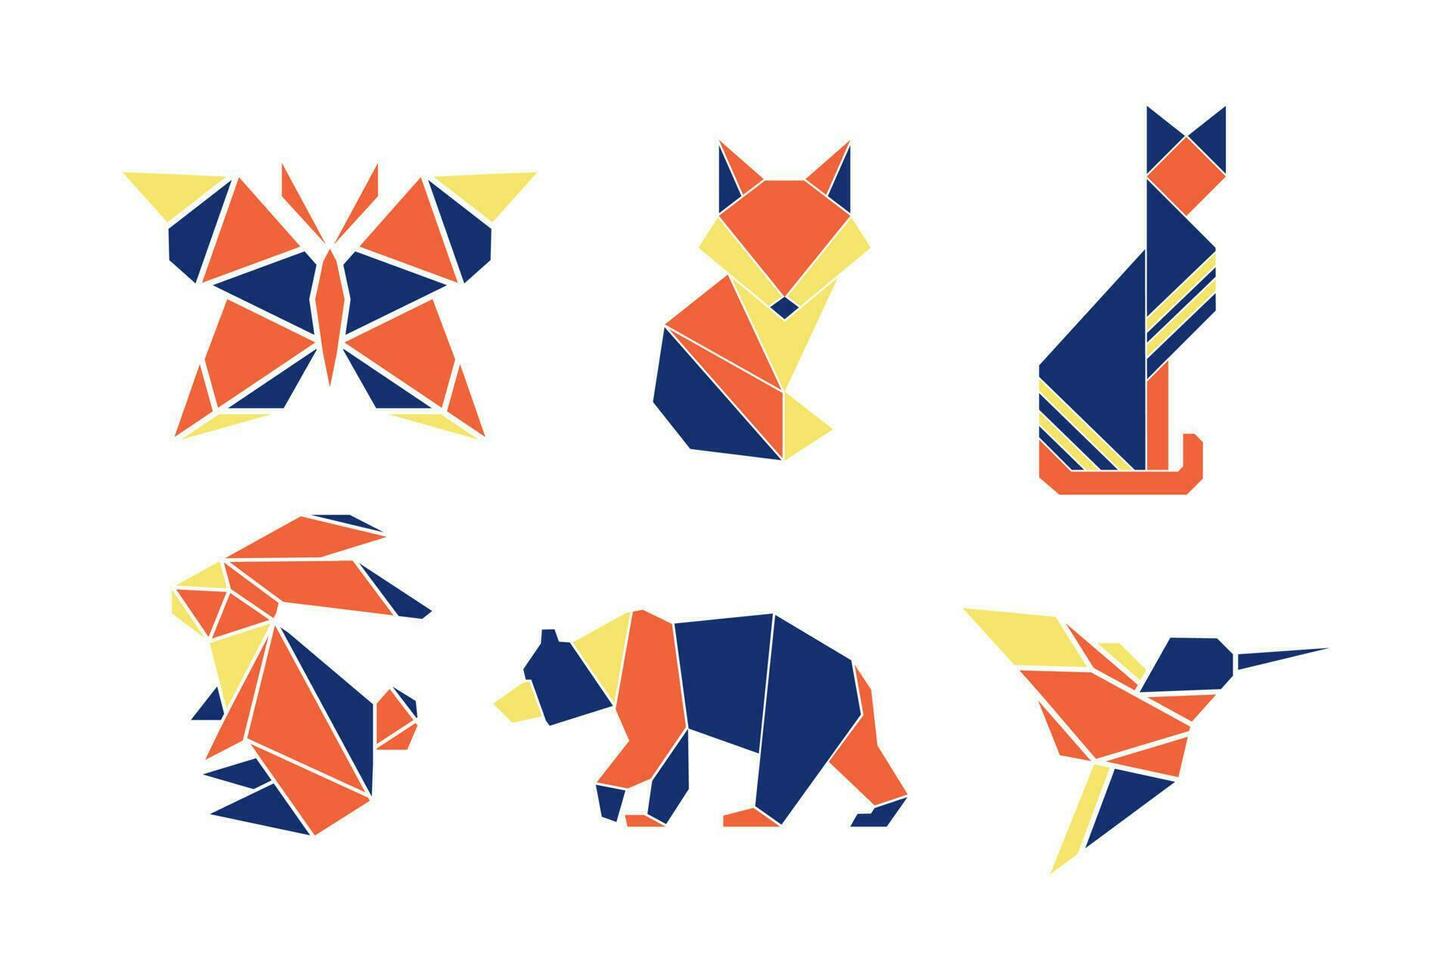 geométrico colorido origami tangram animales vector sencillo ilustración gato, pájaro, oso, conejo, zorro, mariposa editable